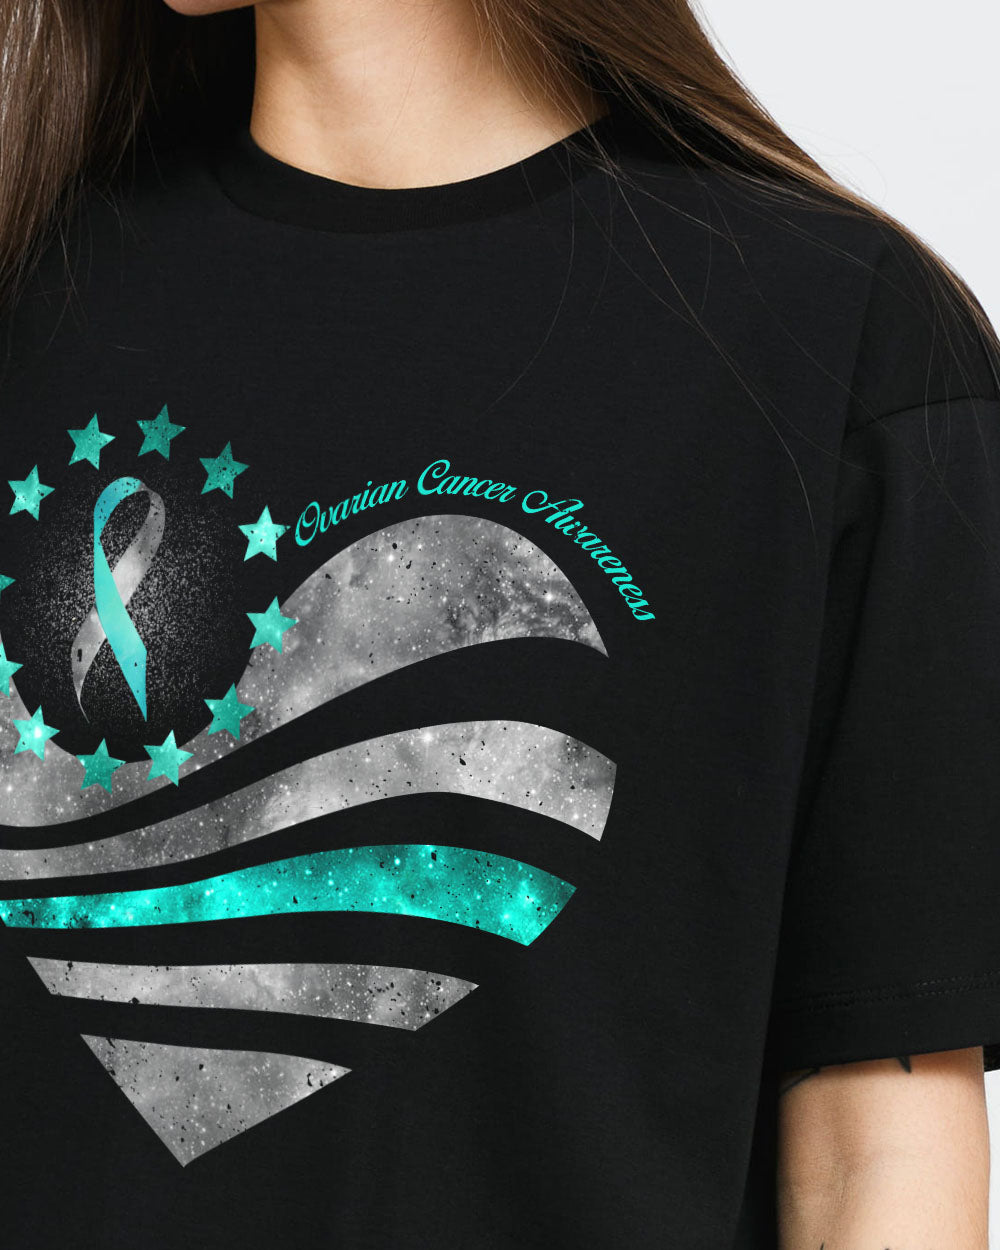 Sunflower Flag Women's Ovarian Cancer Awareness Tshirt